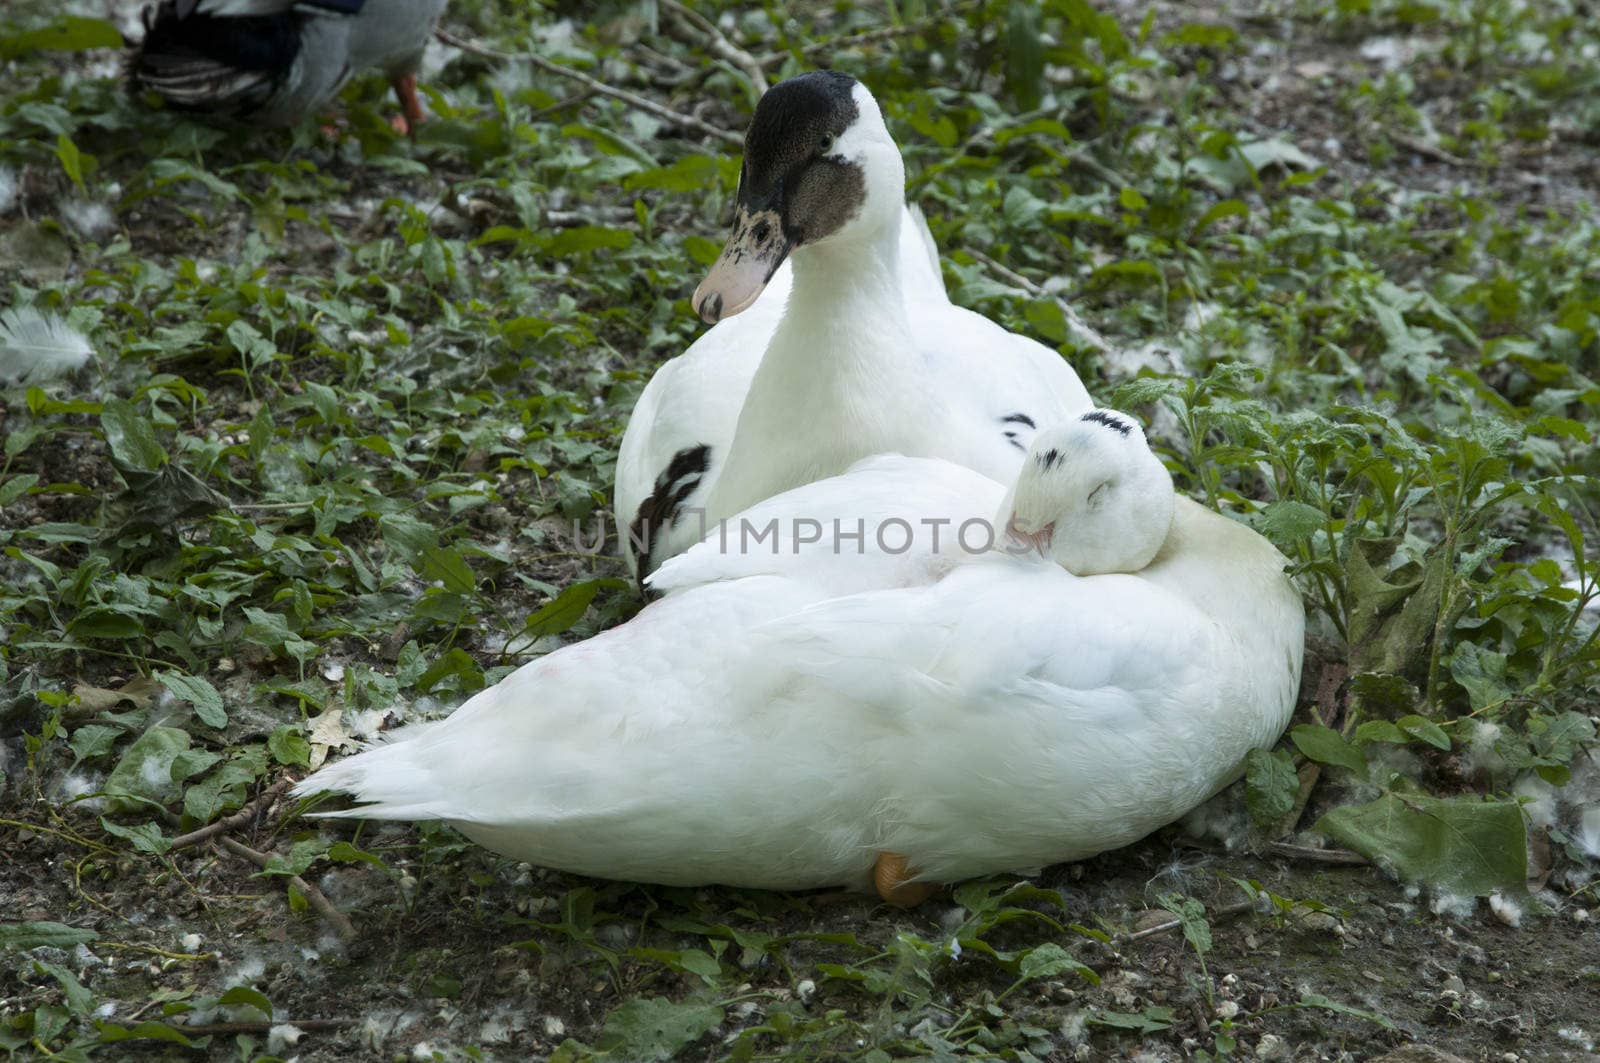 white ducks by arnau2098